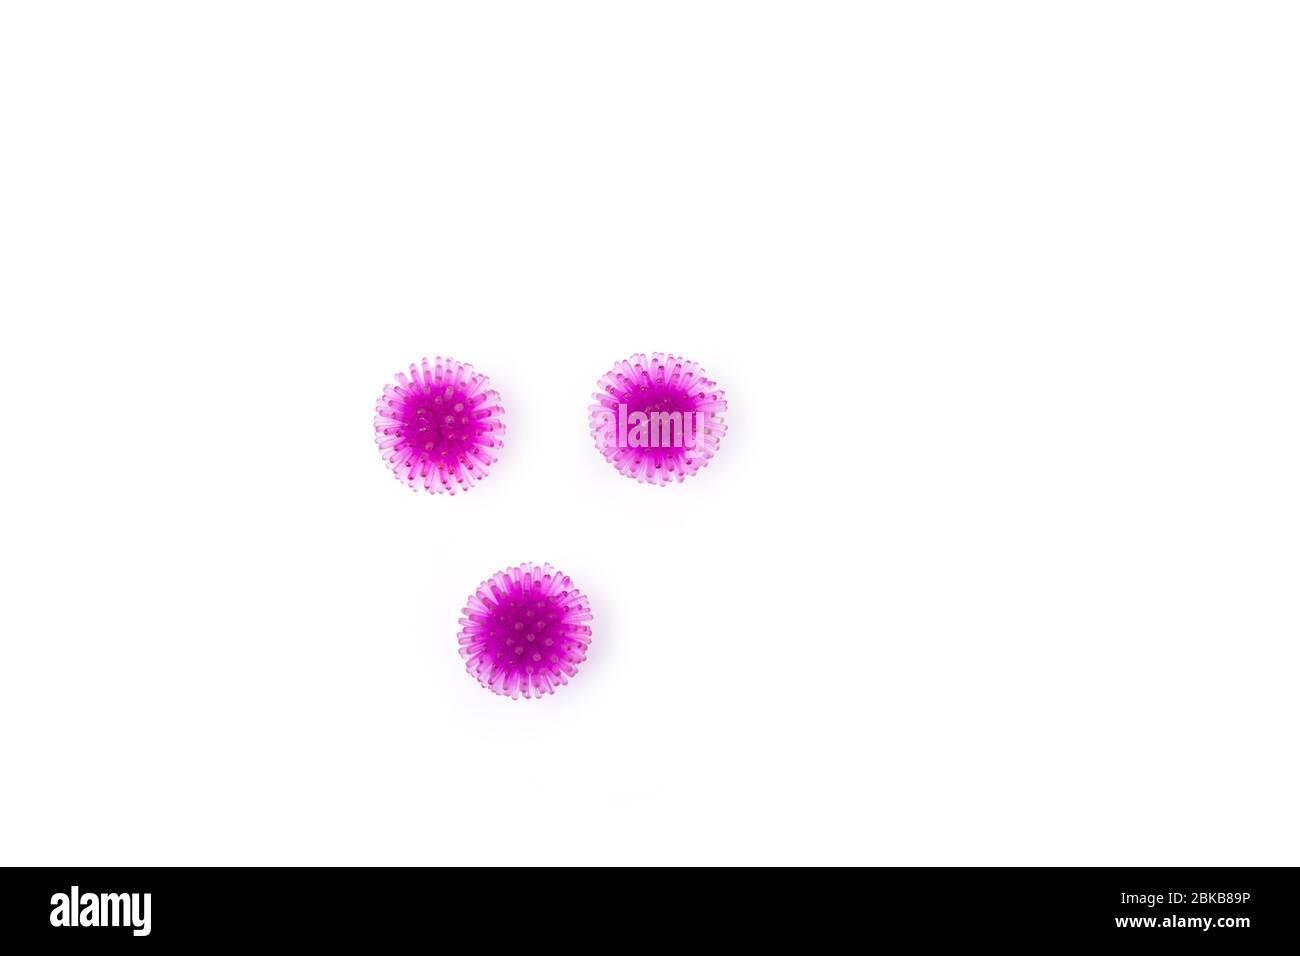 Abstract virus strain model coronavirus covid-19 on white background. Virus Pandemic Protection Concept. Stock Photo